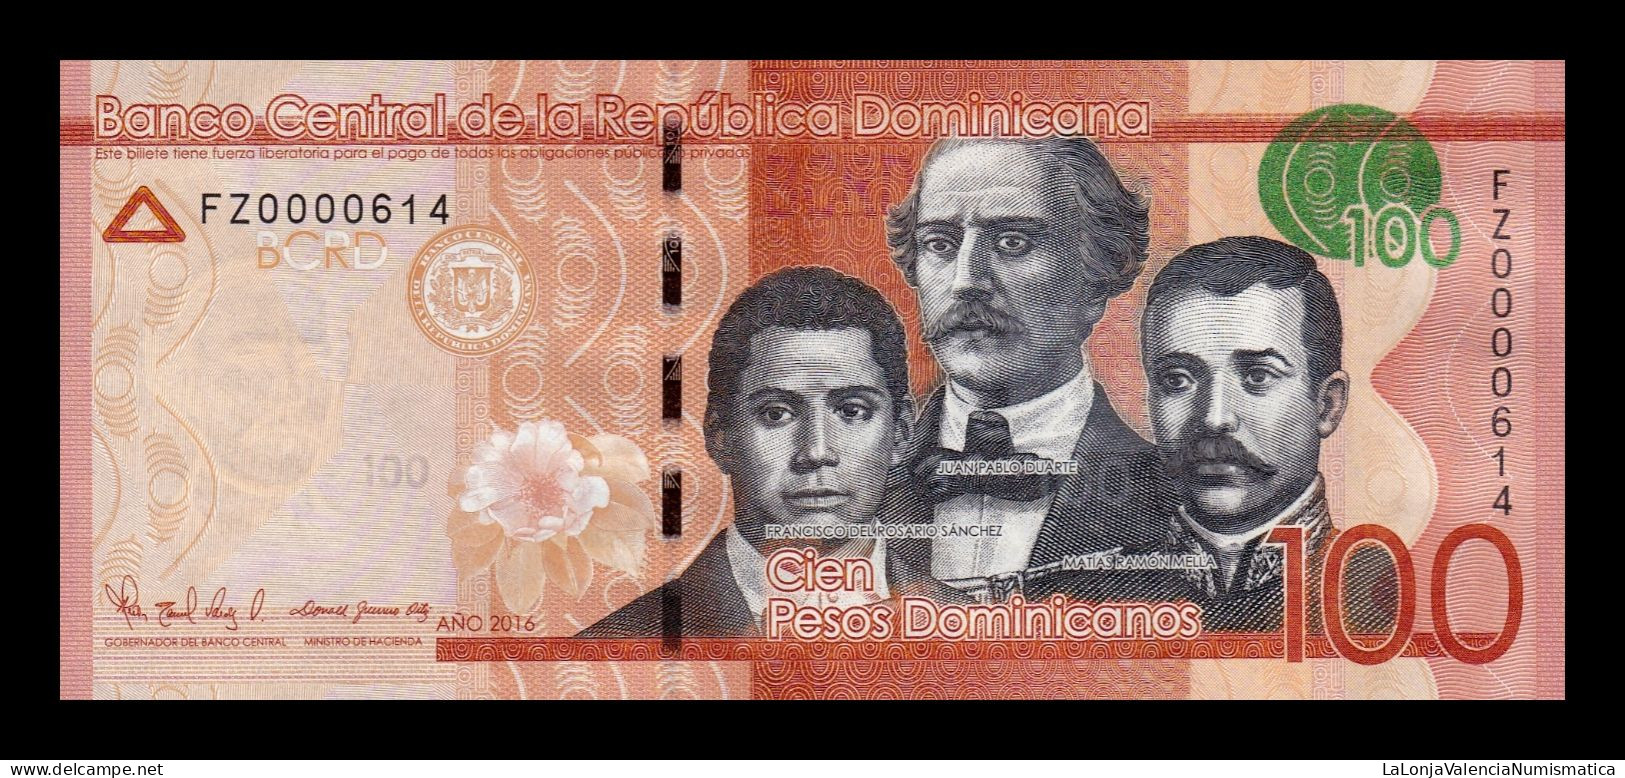 República Dominicana 100 Pesos Dominicanos 2016 Pick 190c Low Serial 614 Sc Unc - Dominicaine